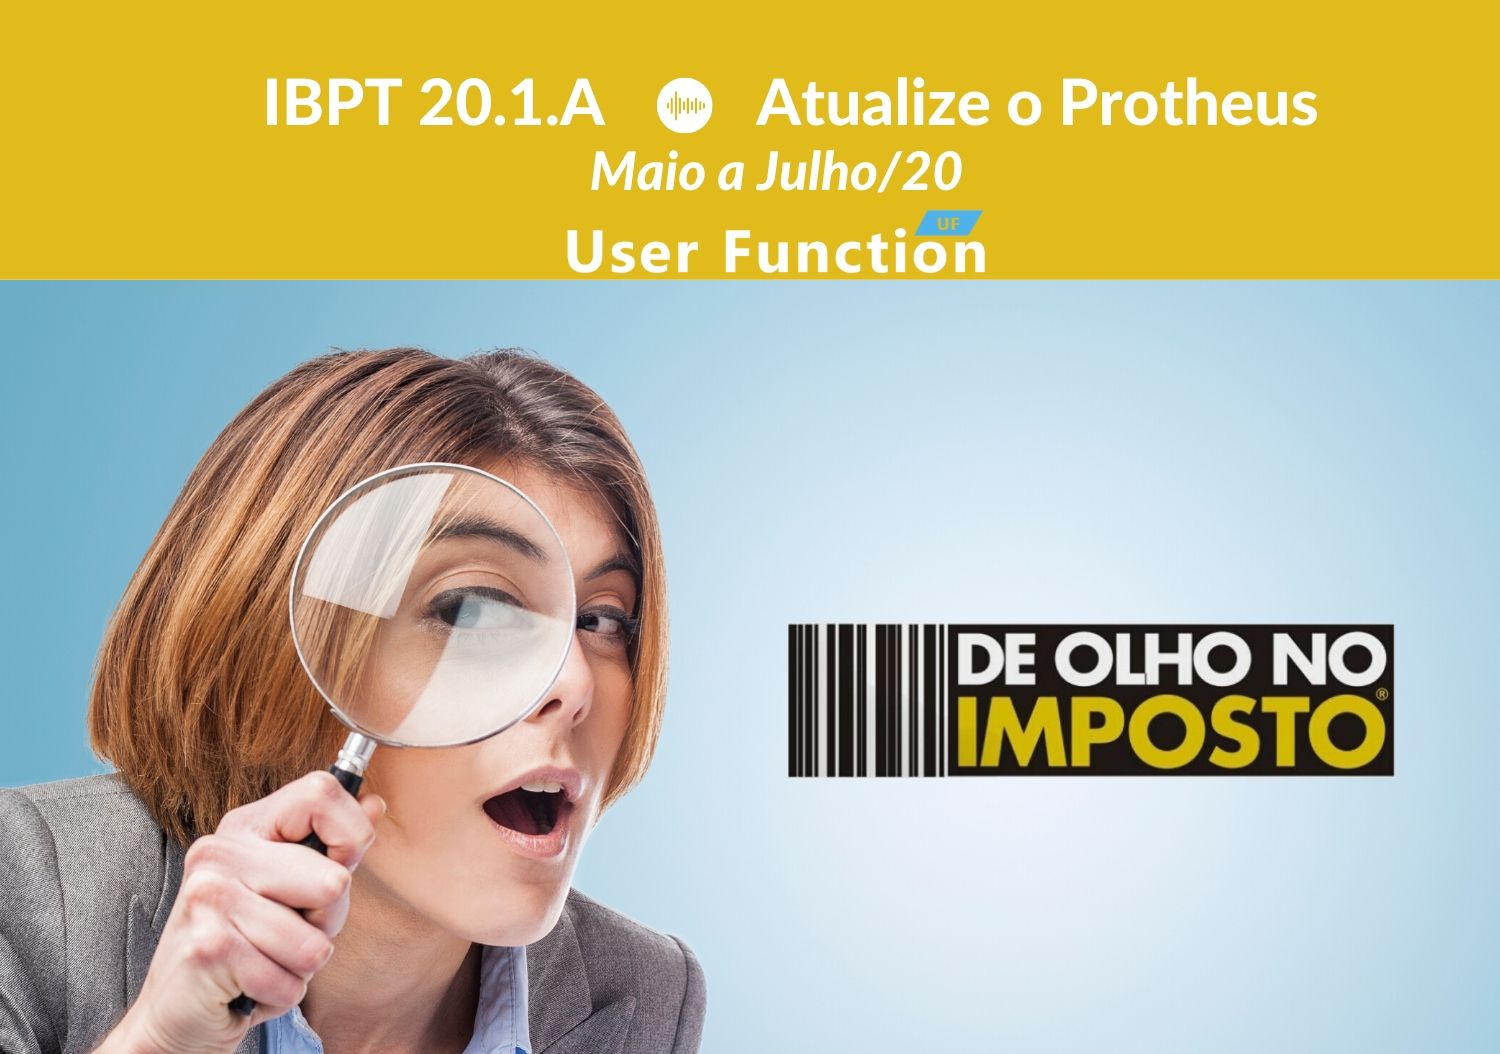 IBPT 20.1.B